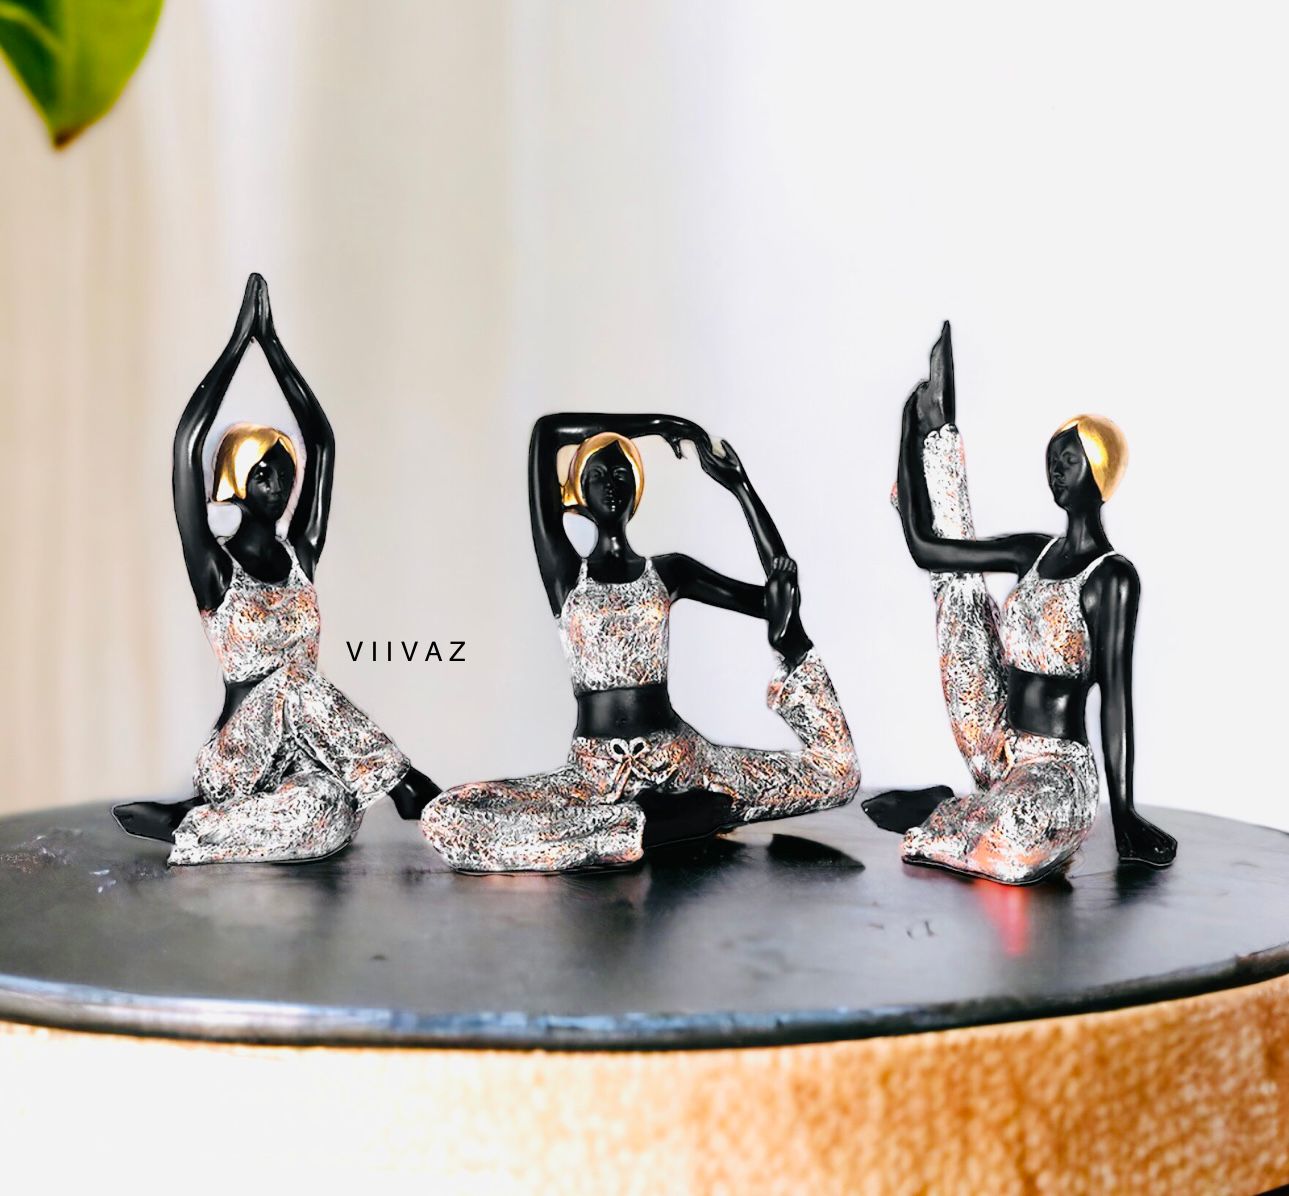 Yoga Figurine Sculpture - Set of 3